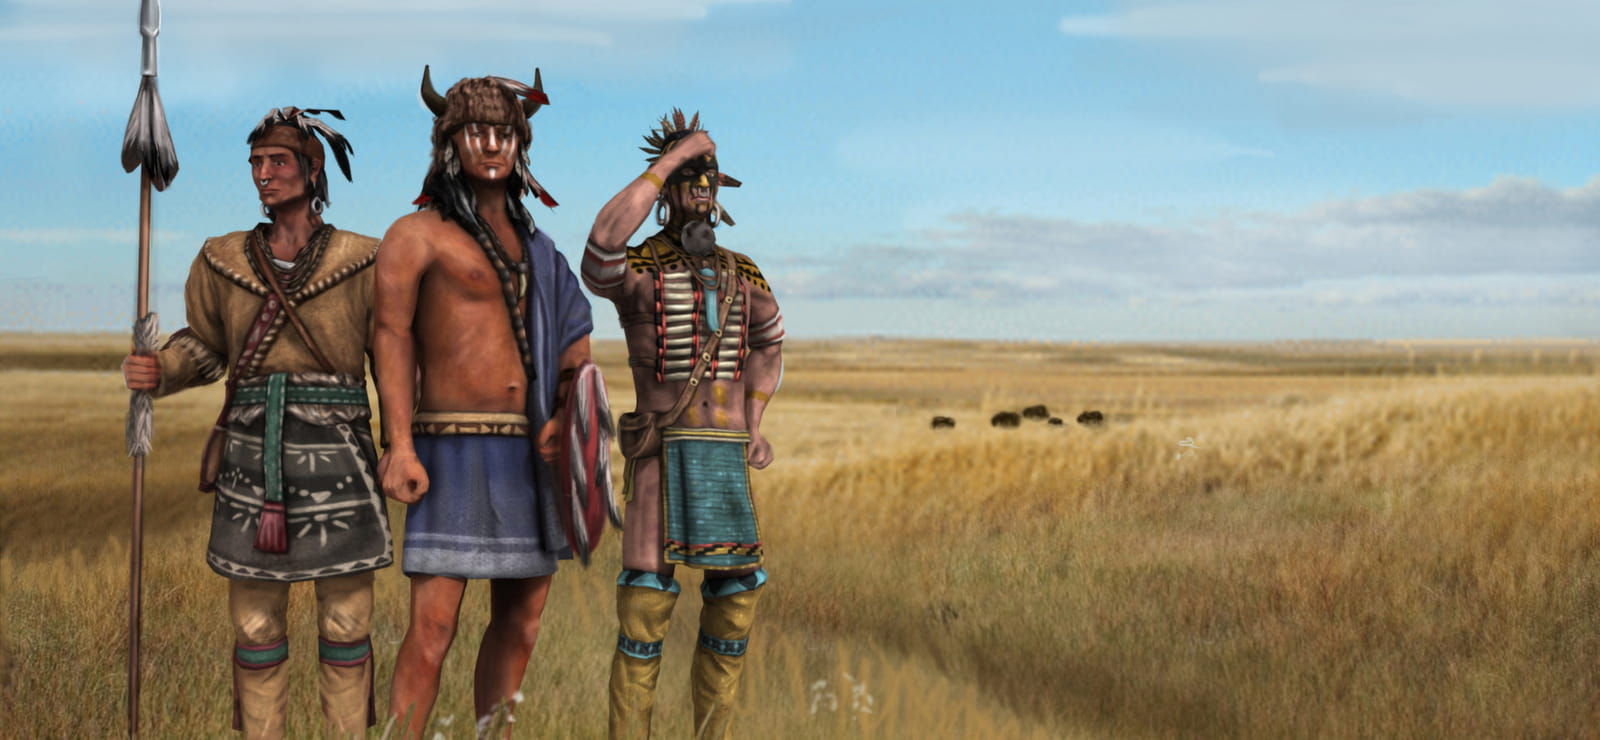 Europa Universalis IV: Native Americans Unit Pack